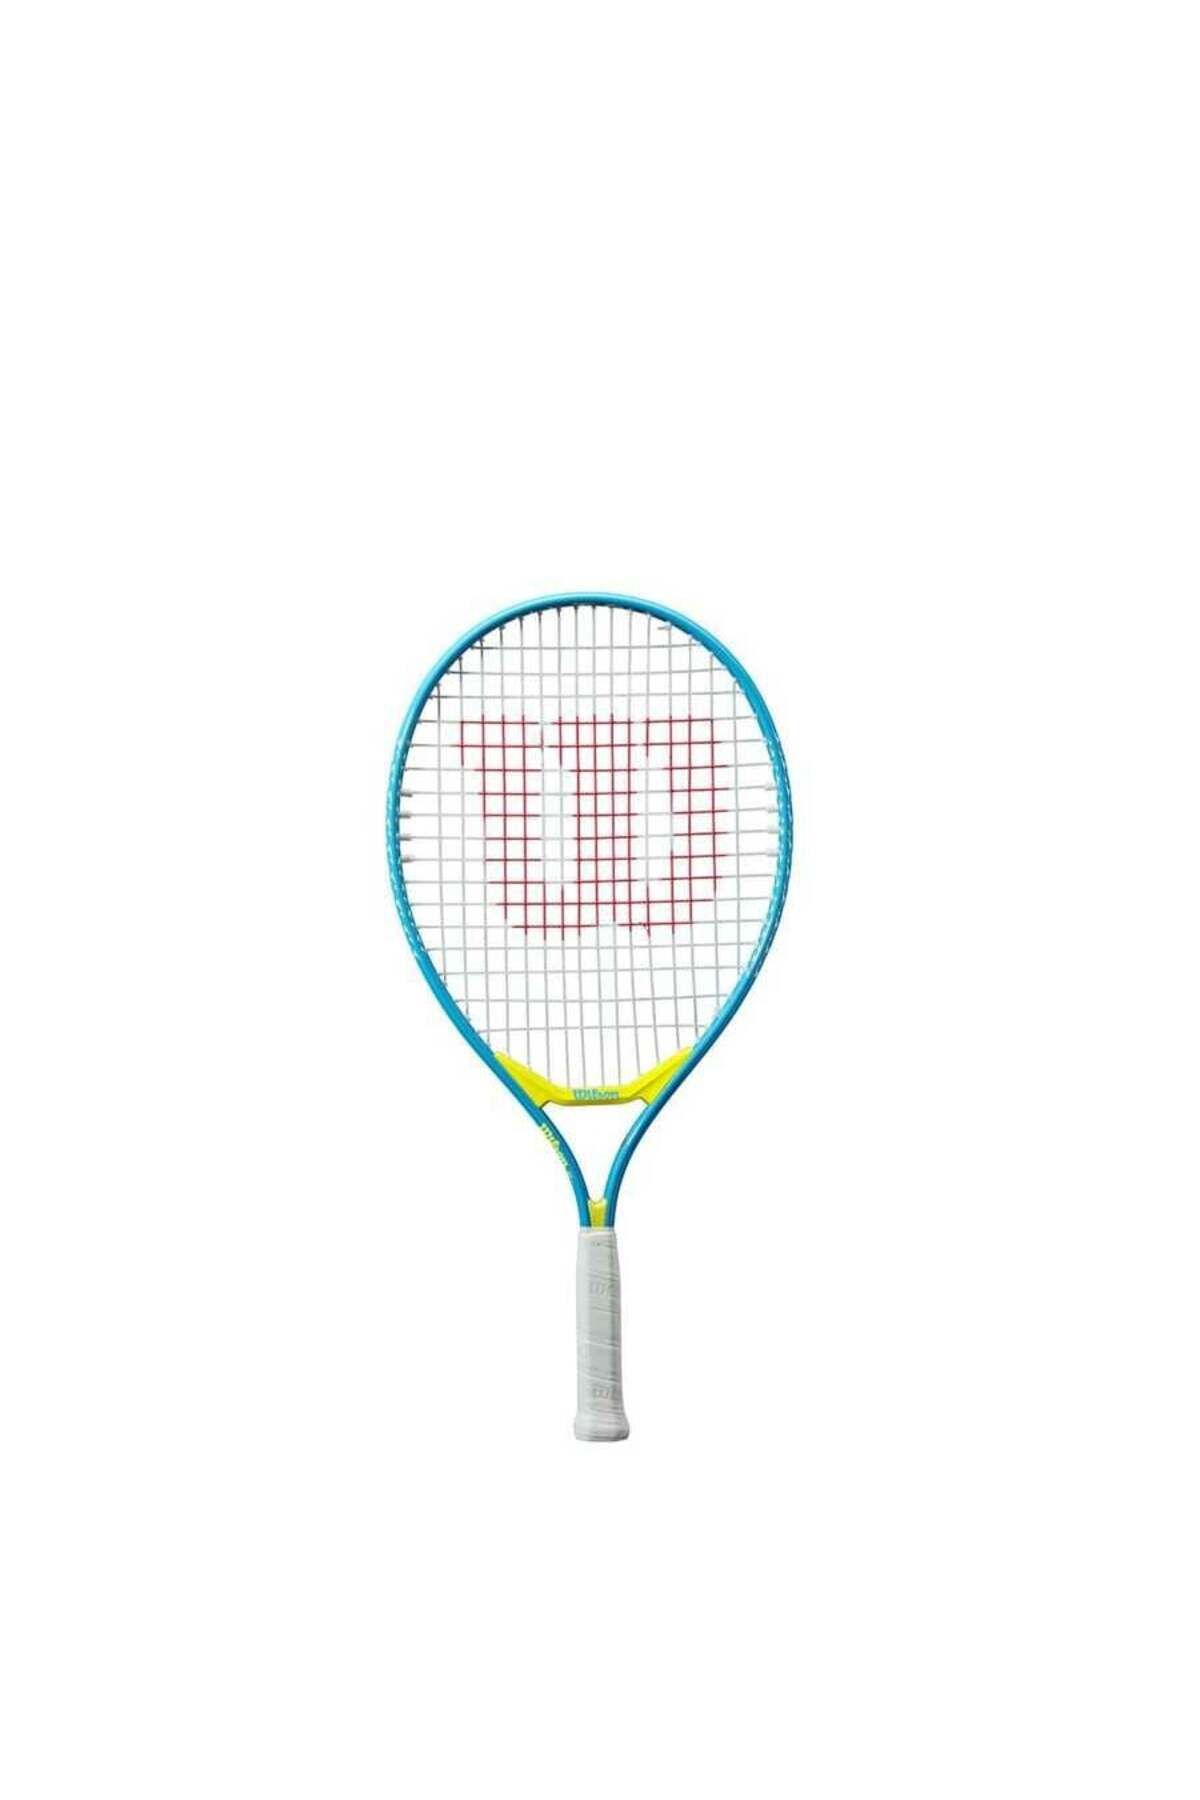 Wilson Ultra Power 21 Tenis Raketi Wr118910h